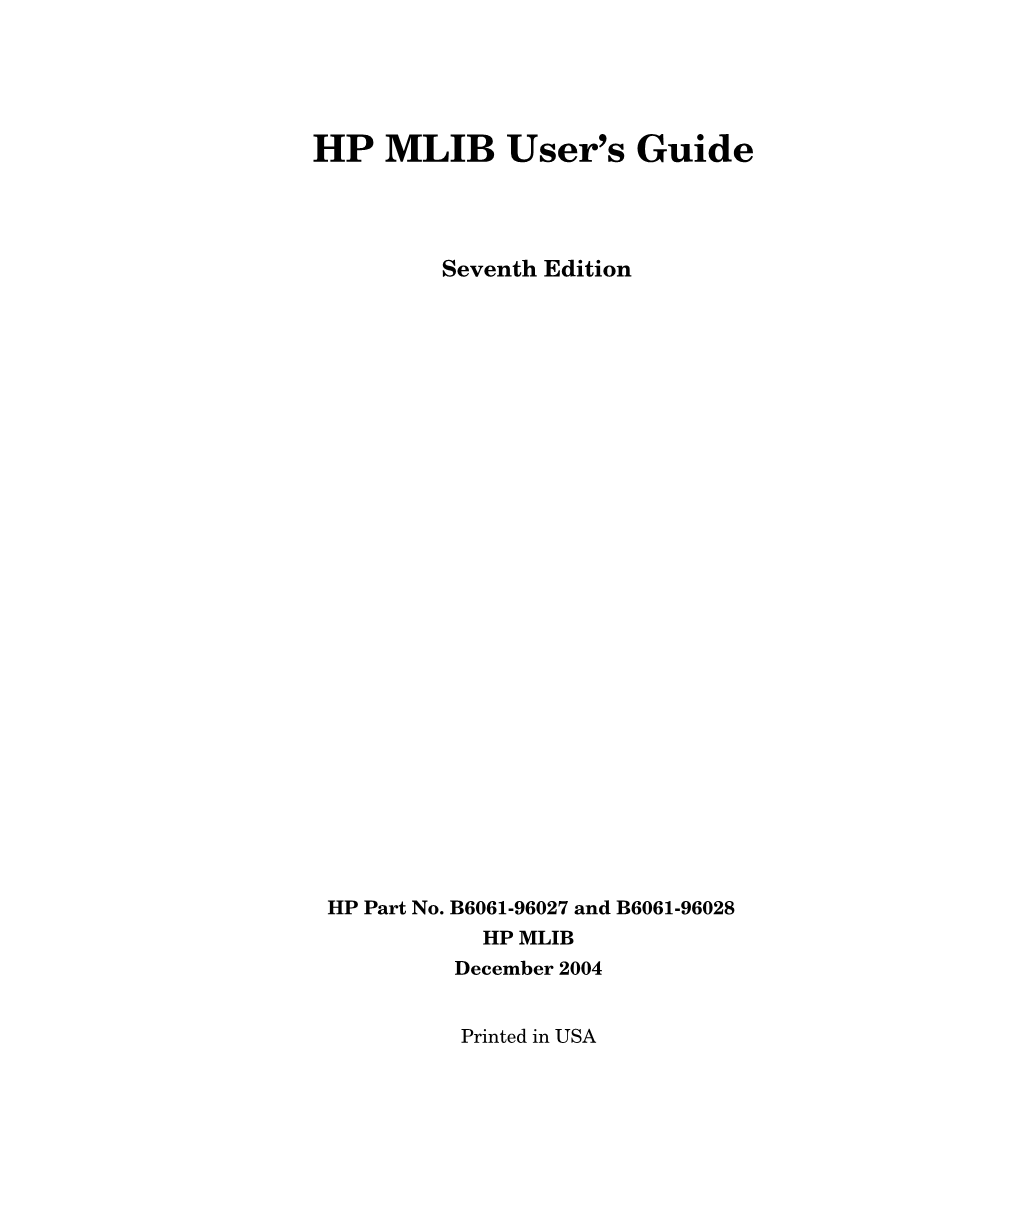 HP MLIB User's Guide